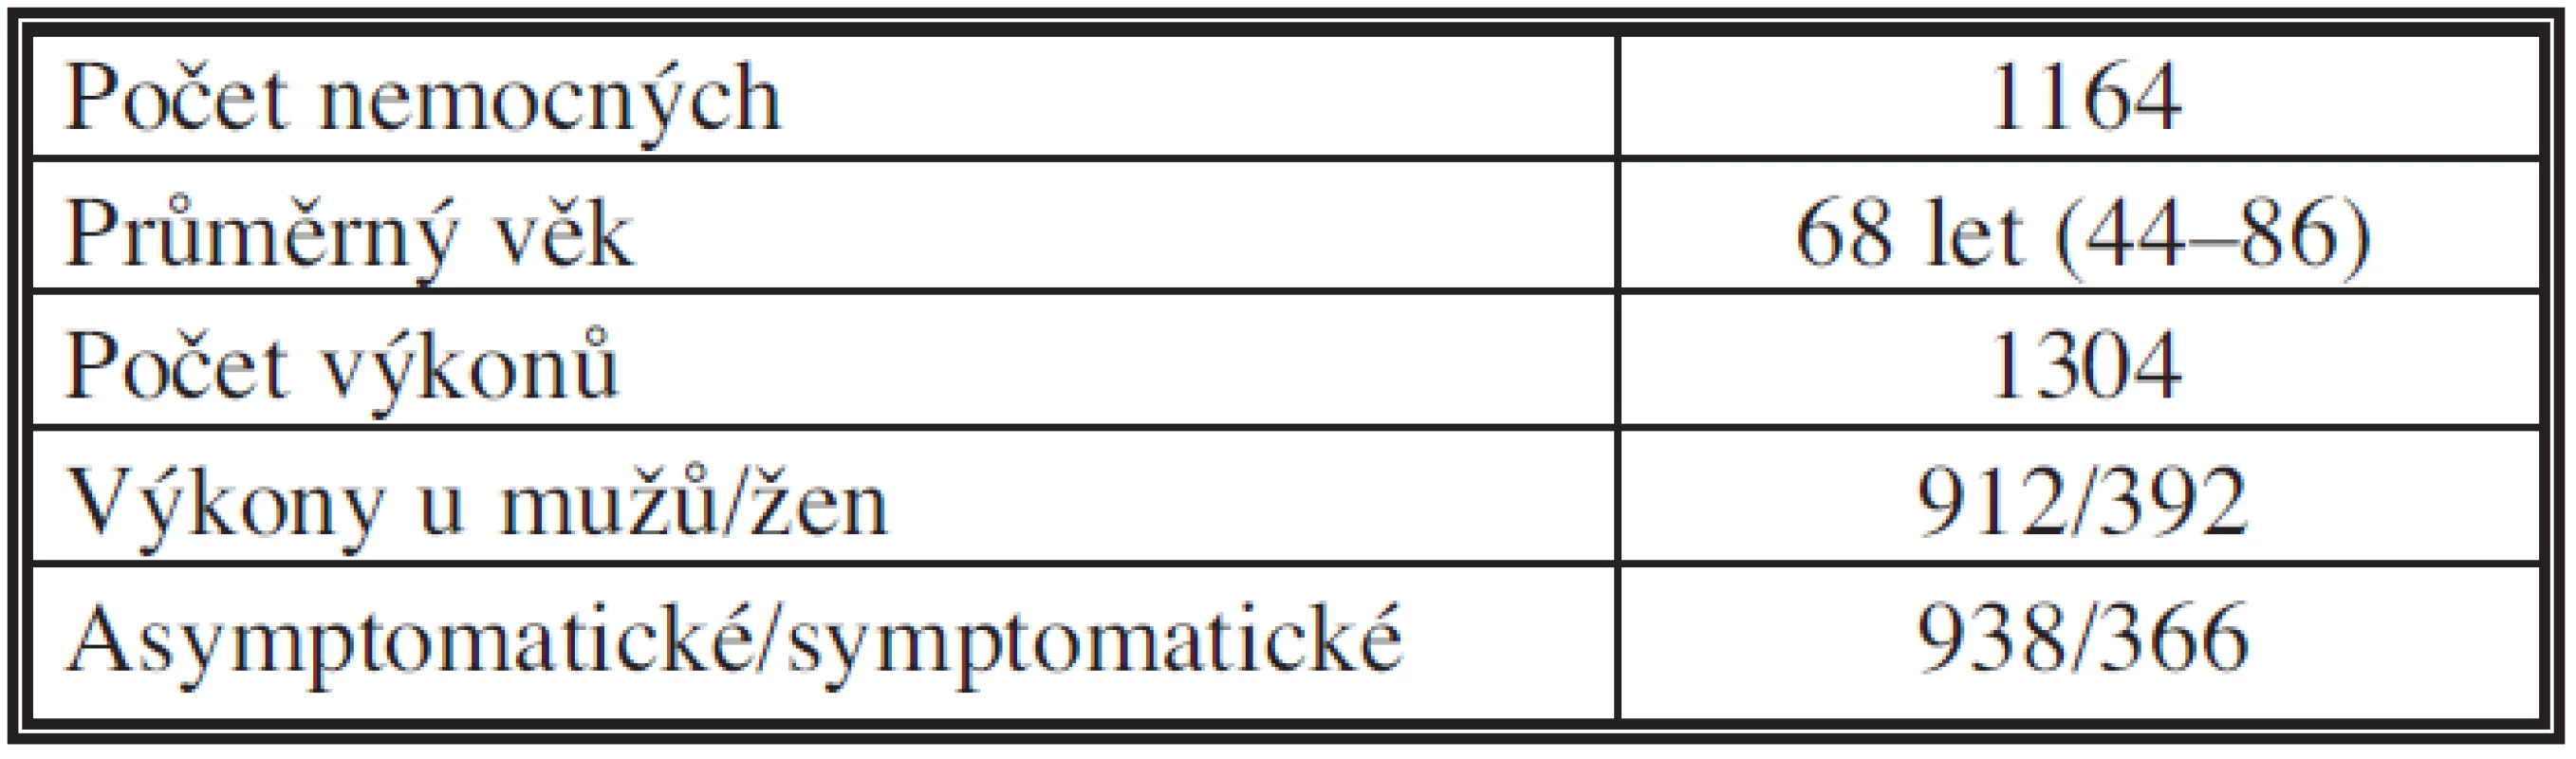 Soubor nemocných 1. 1. 2002 – 31. 12. 2011
Tab. 1: Group of patients 1. 1. 2002 – 31. 12. 2011